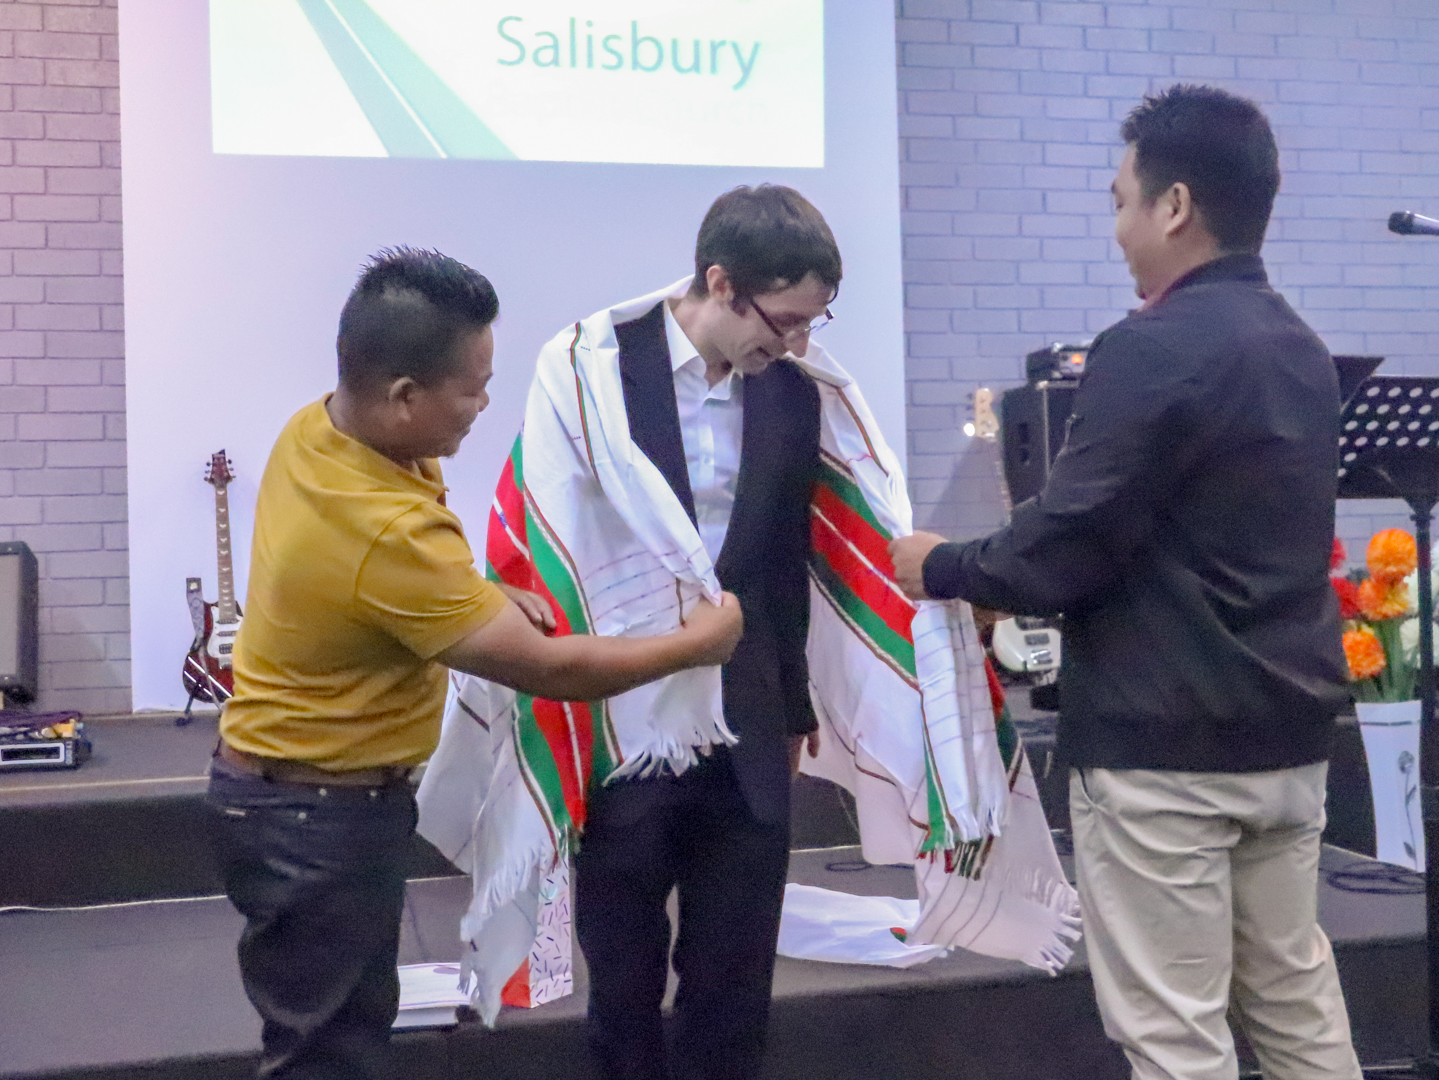 James Foley ordained at Salisbury Baptist